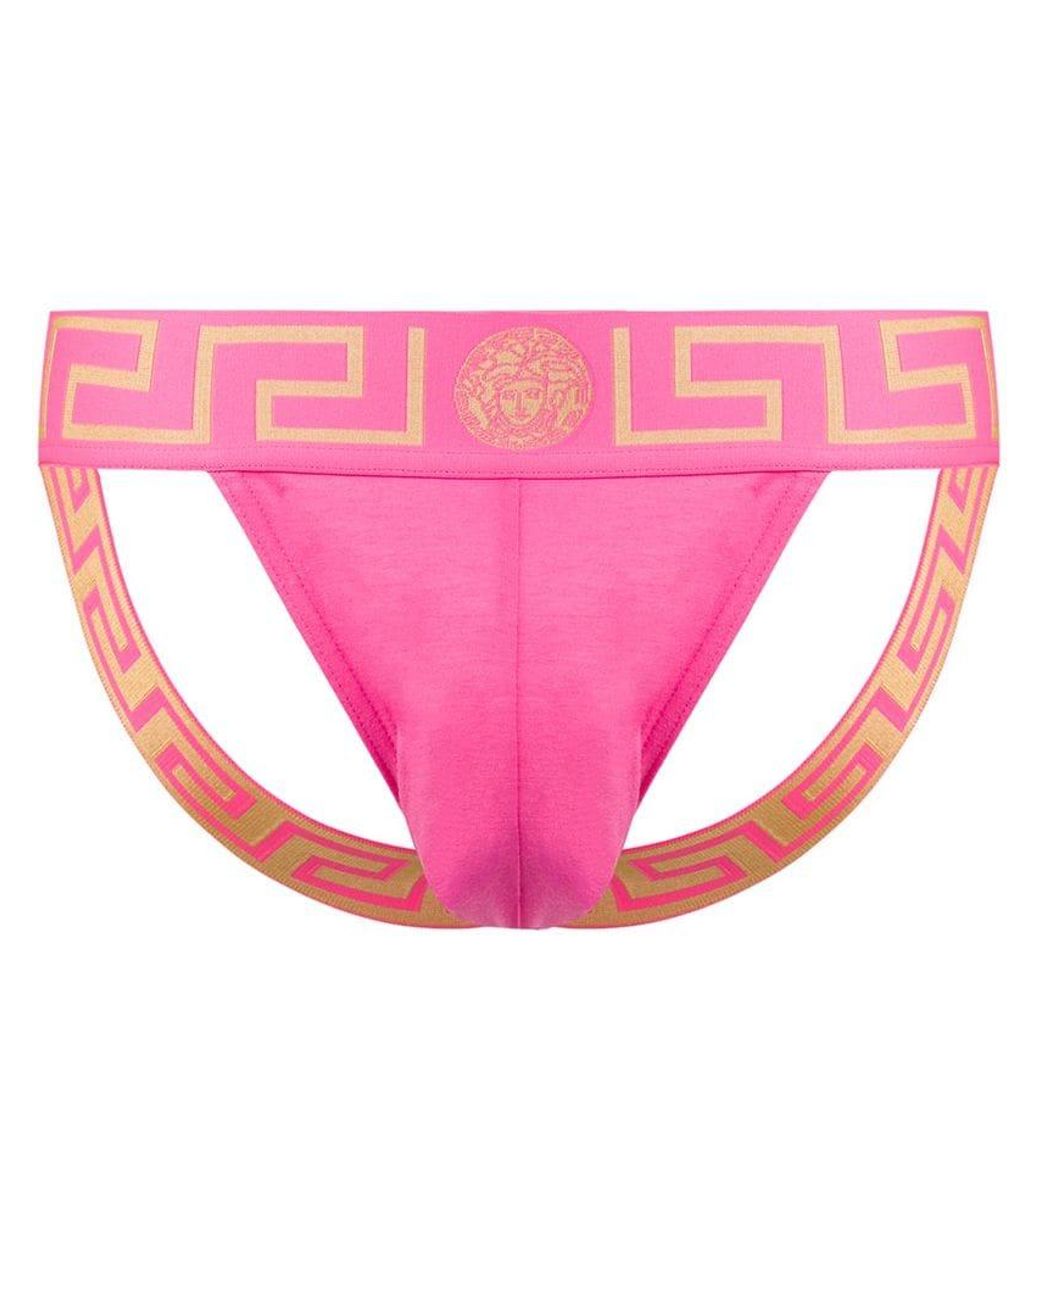 Versace Greek Key Low-rise Jock Strap in Pink for Men